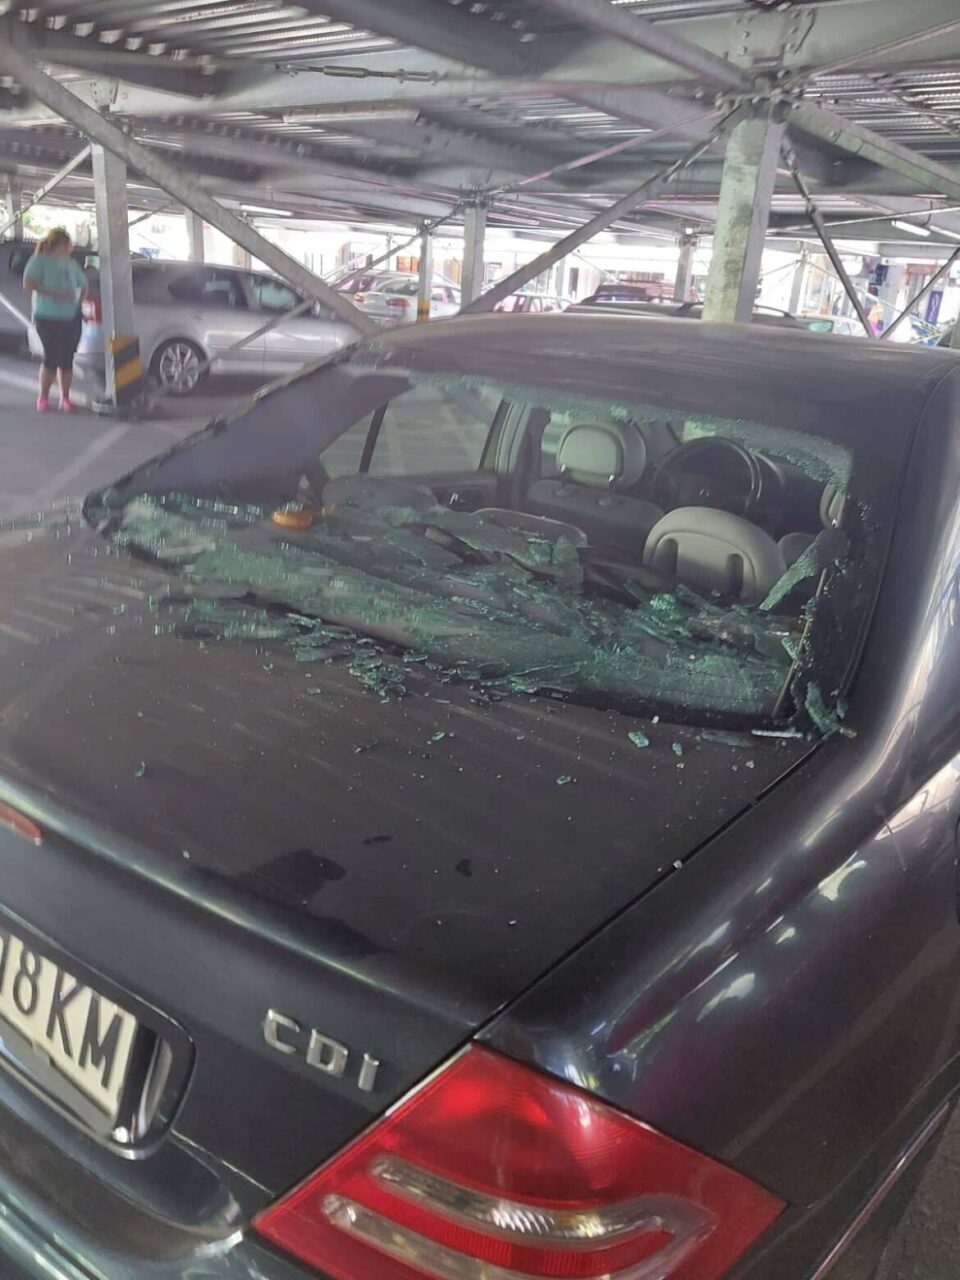 Скопјанецот кој искрши 18 автомобили кај Буњаковец бил пијан